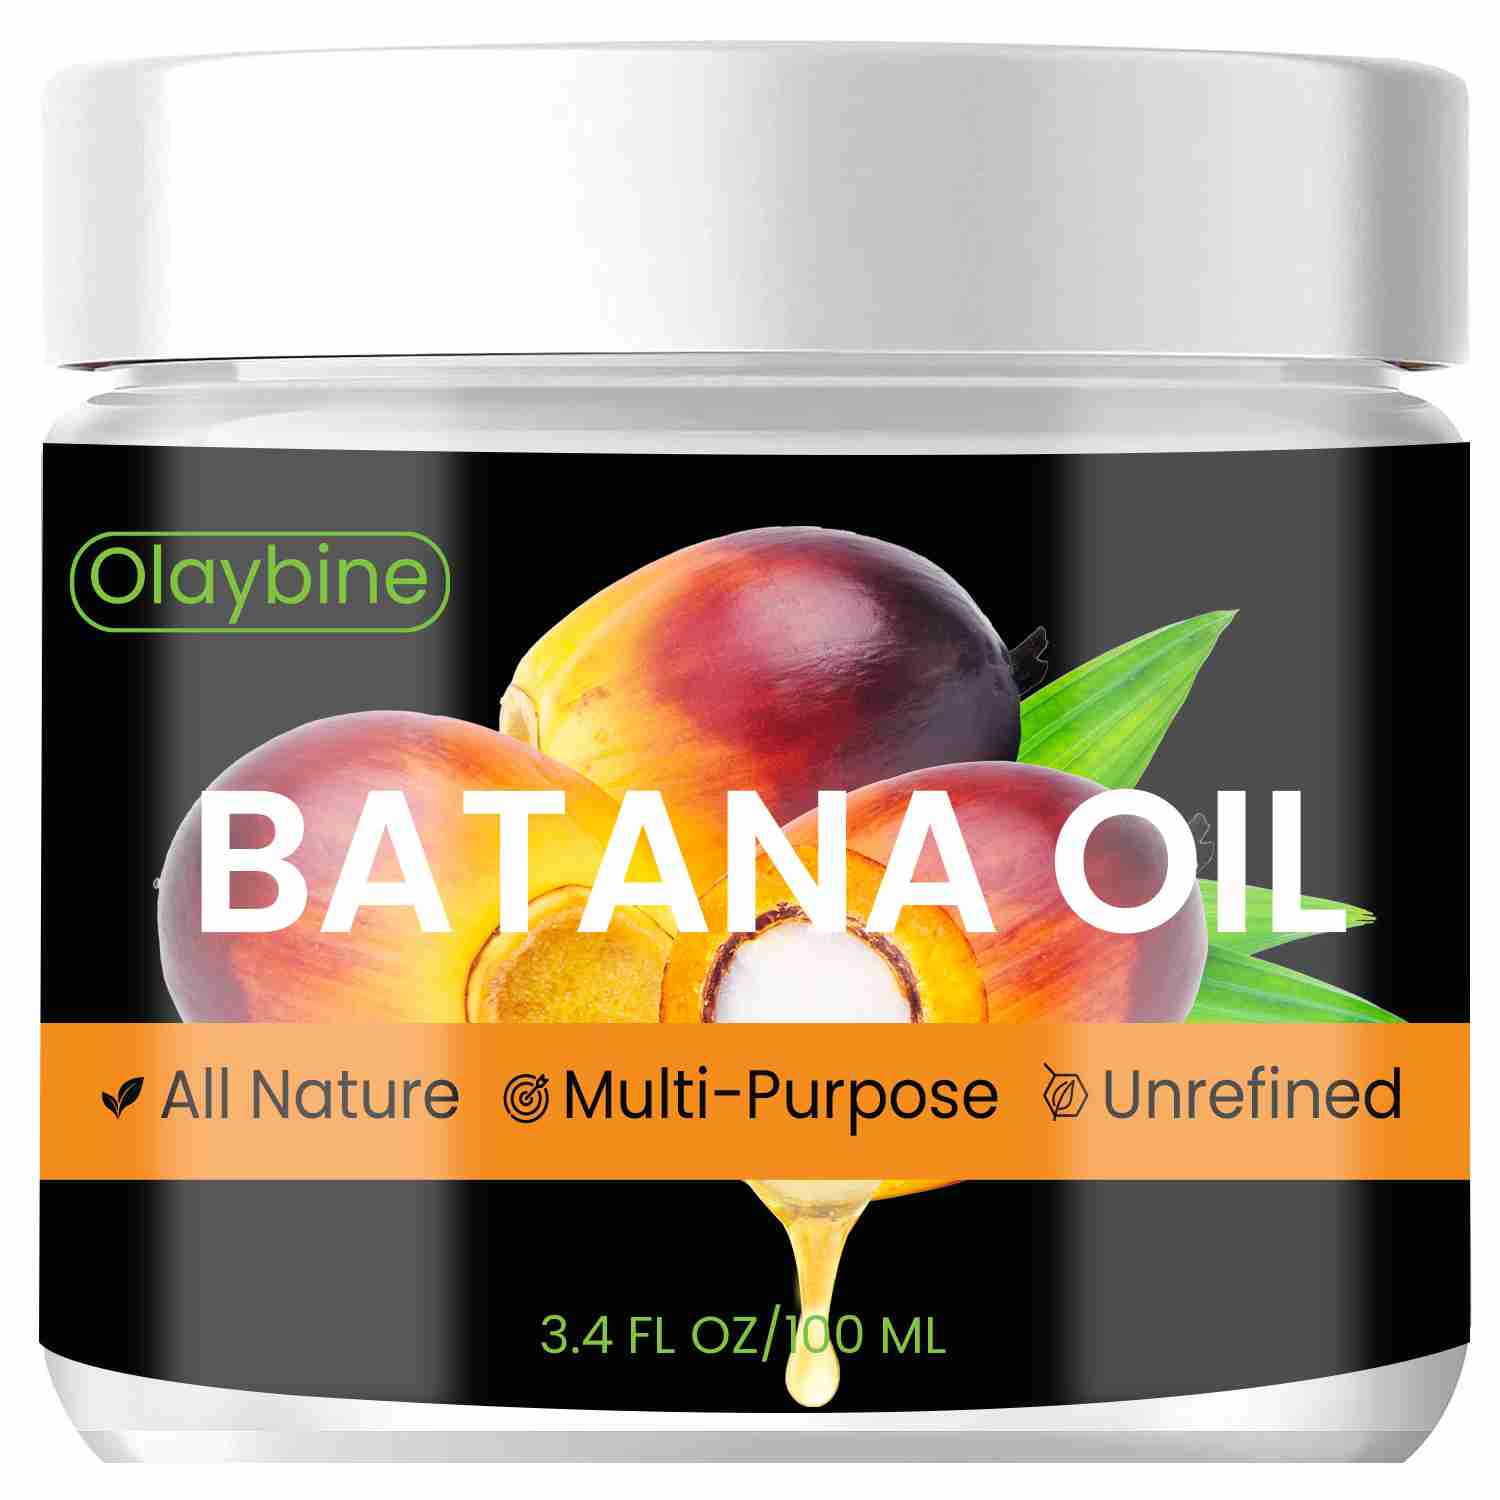 batana-oil with cash back rebate